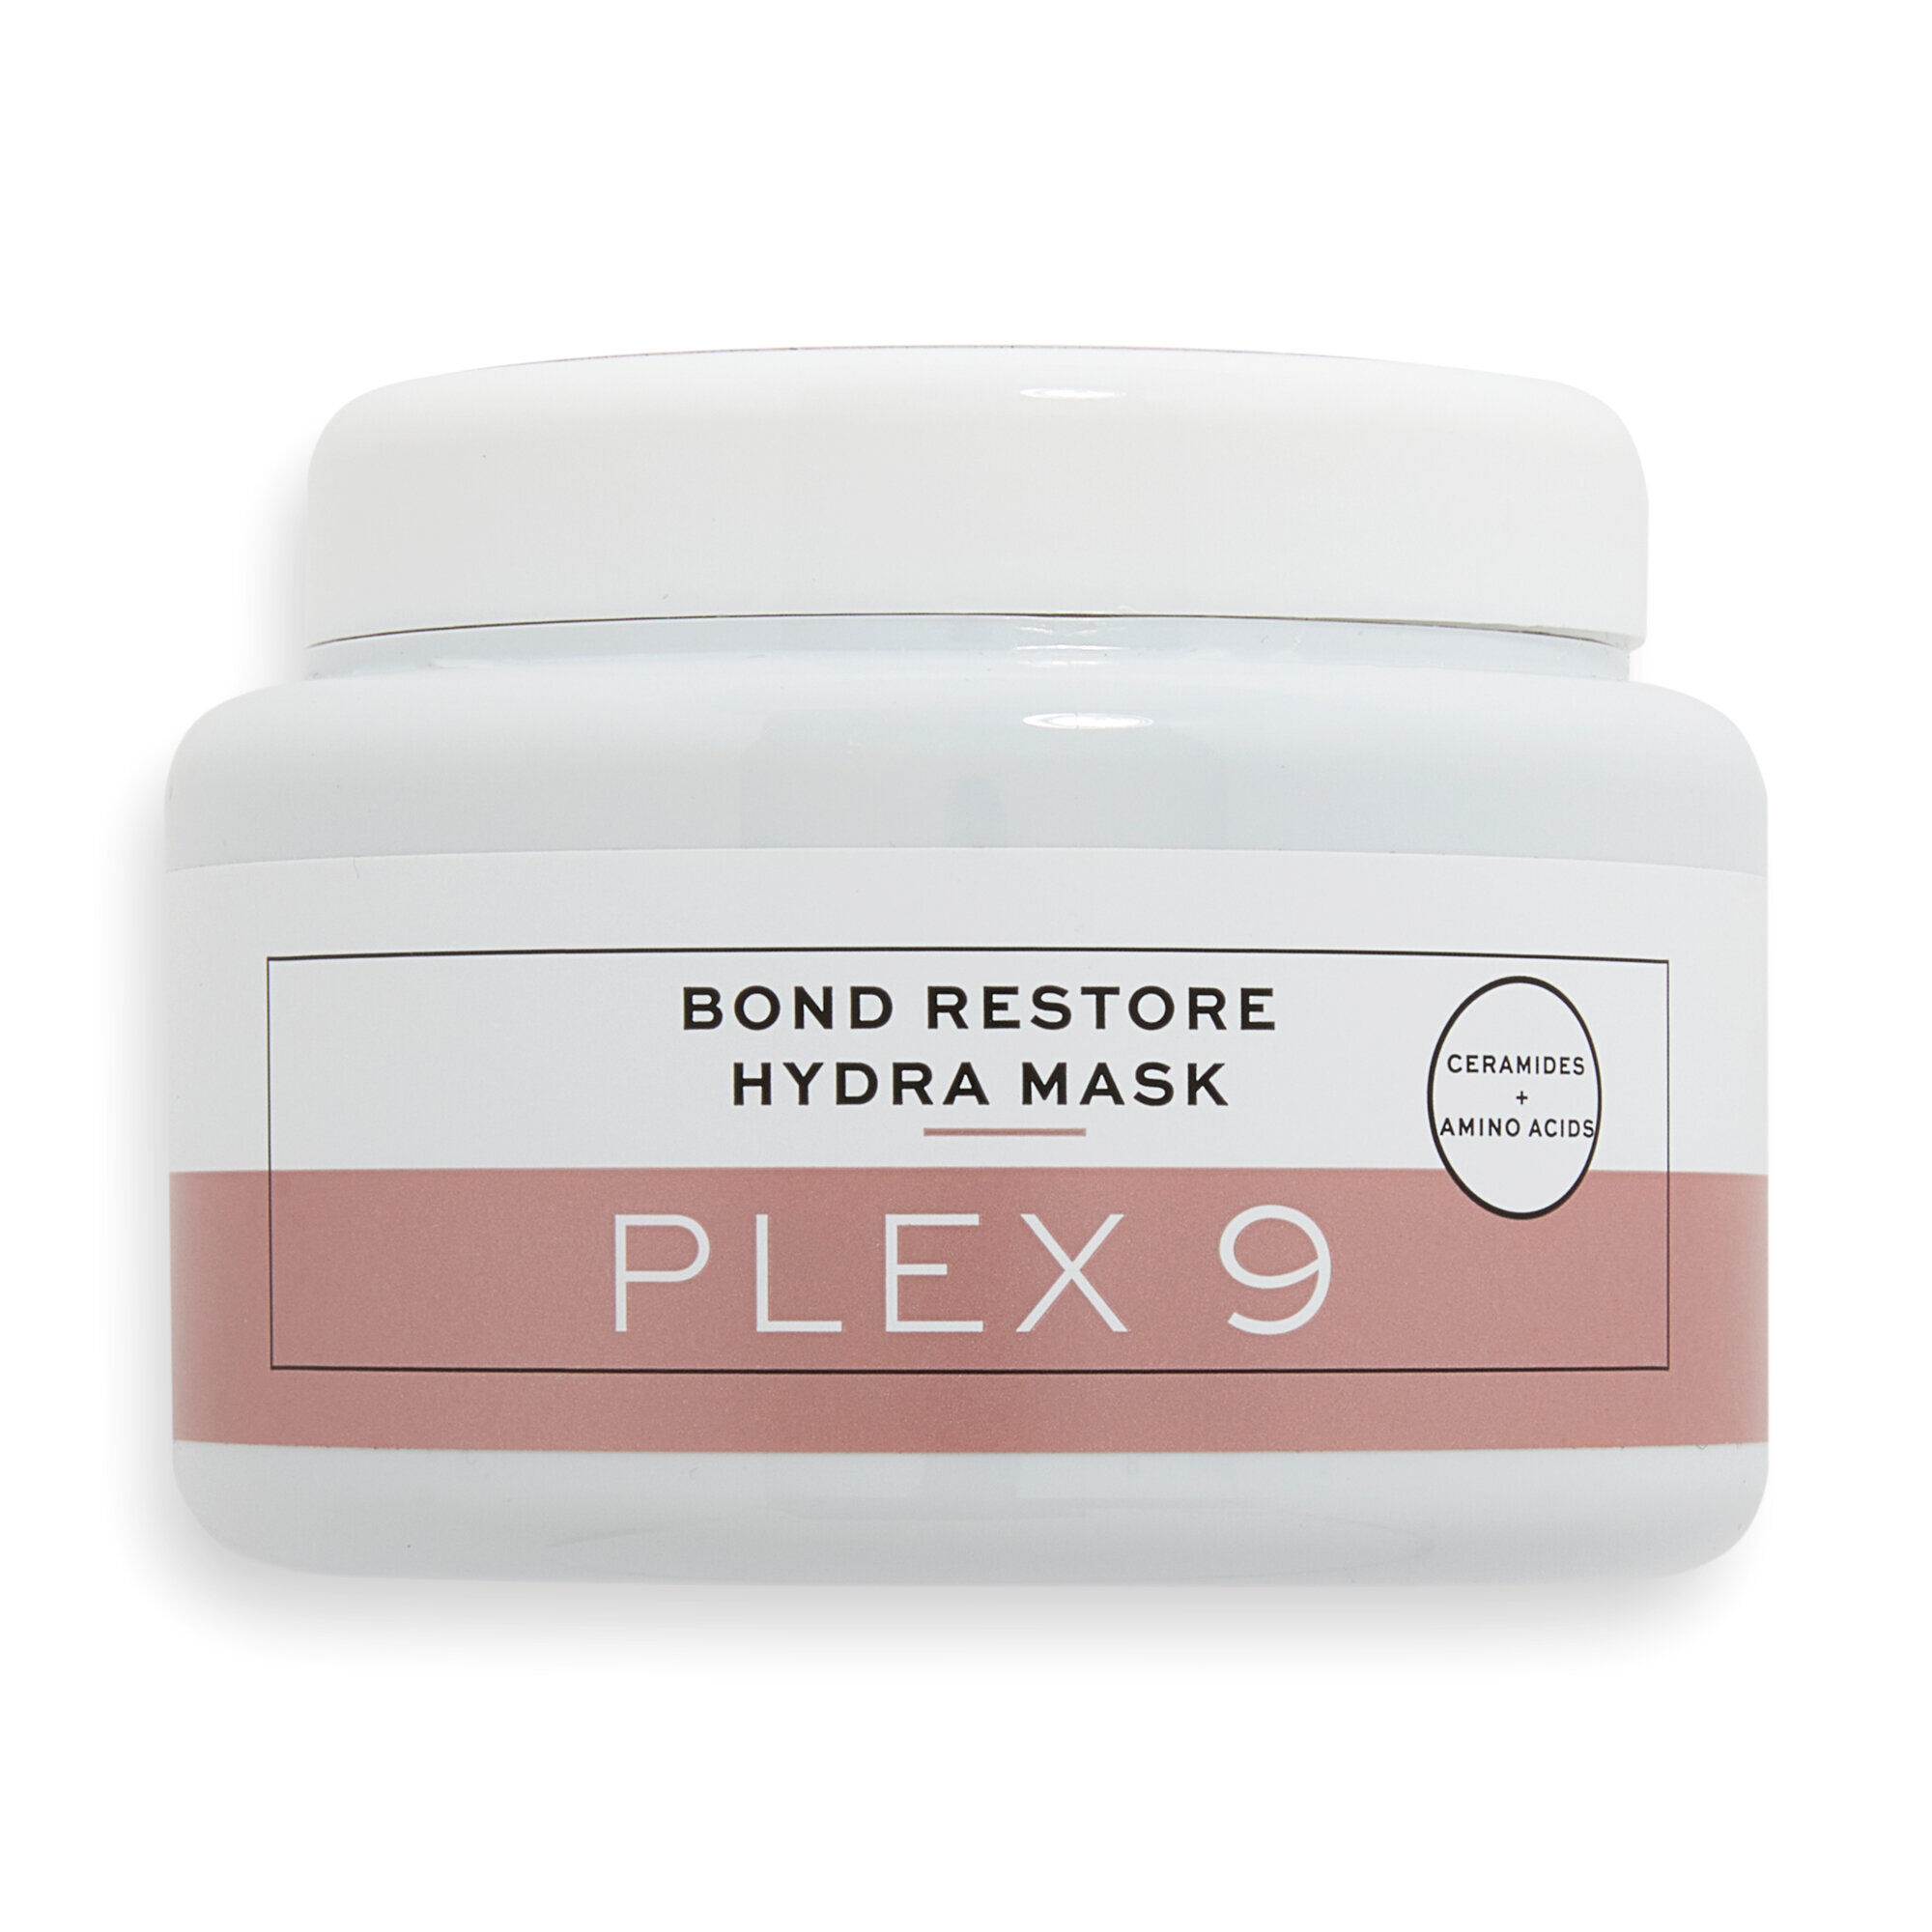 revolutionbeauty.com | Plex 9 Bond Restore Hydra Mask